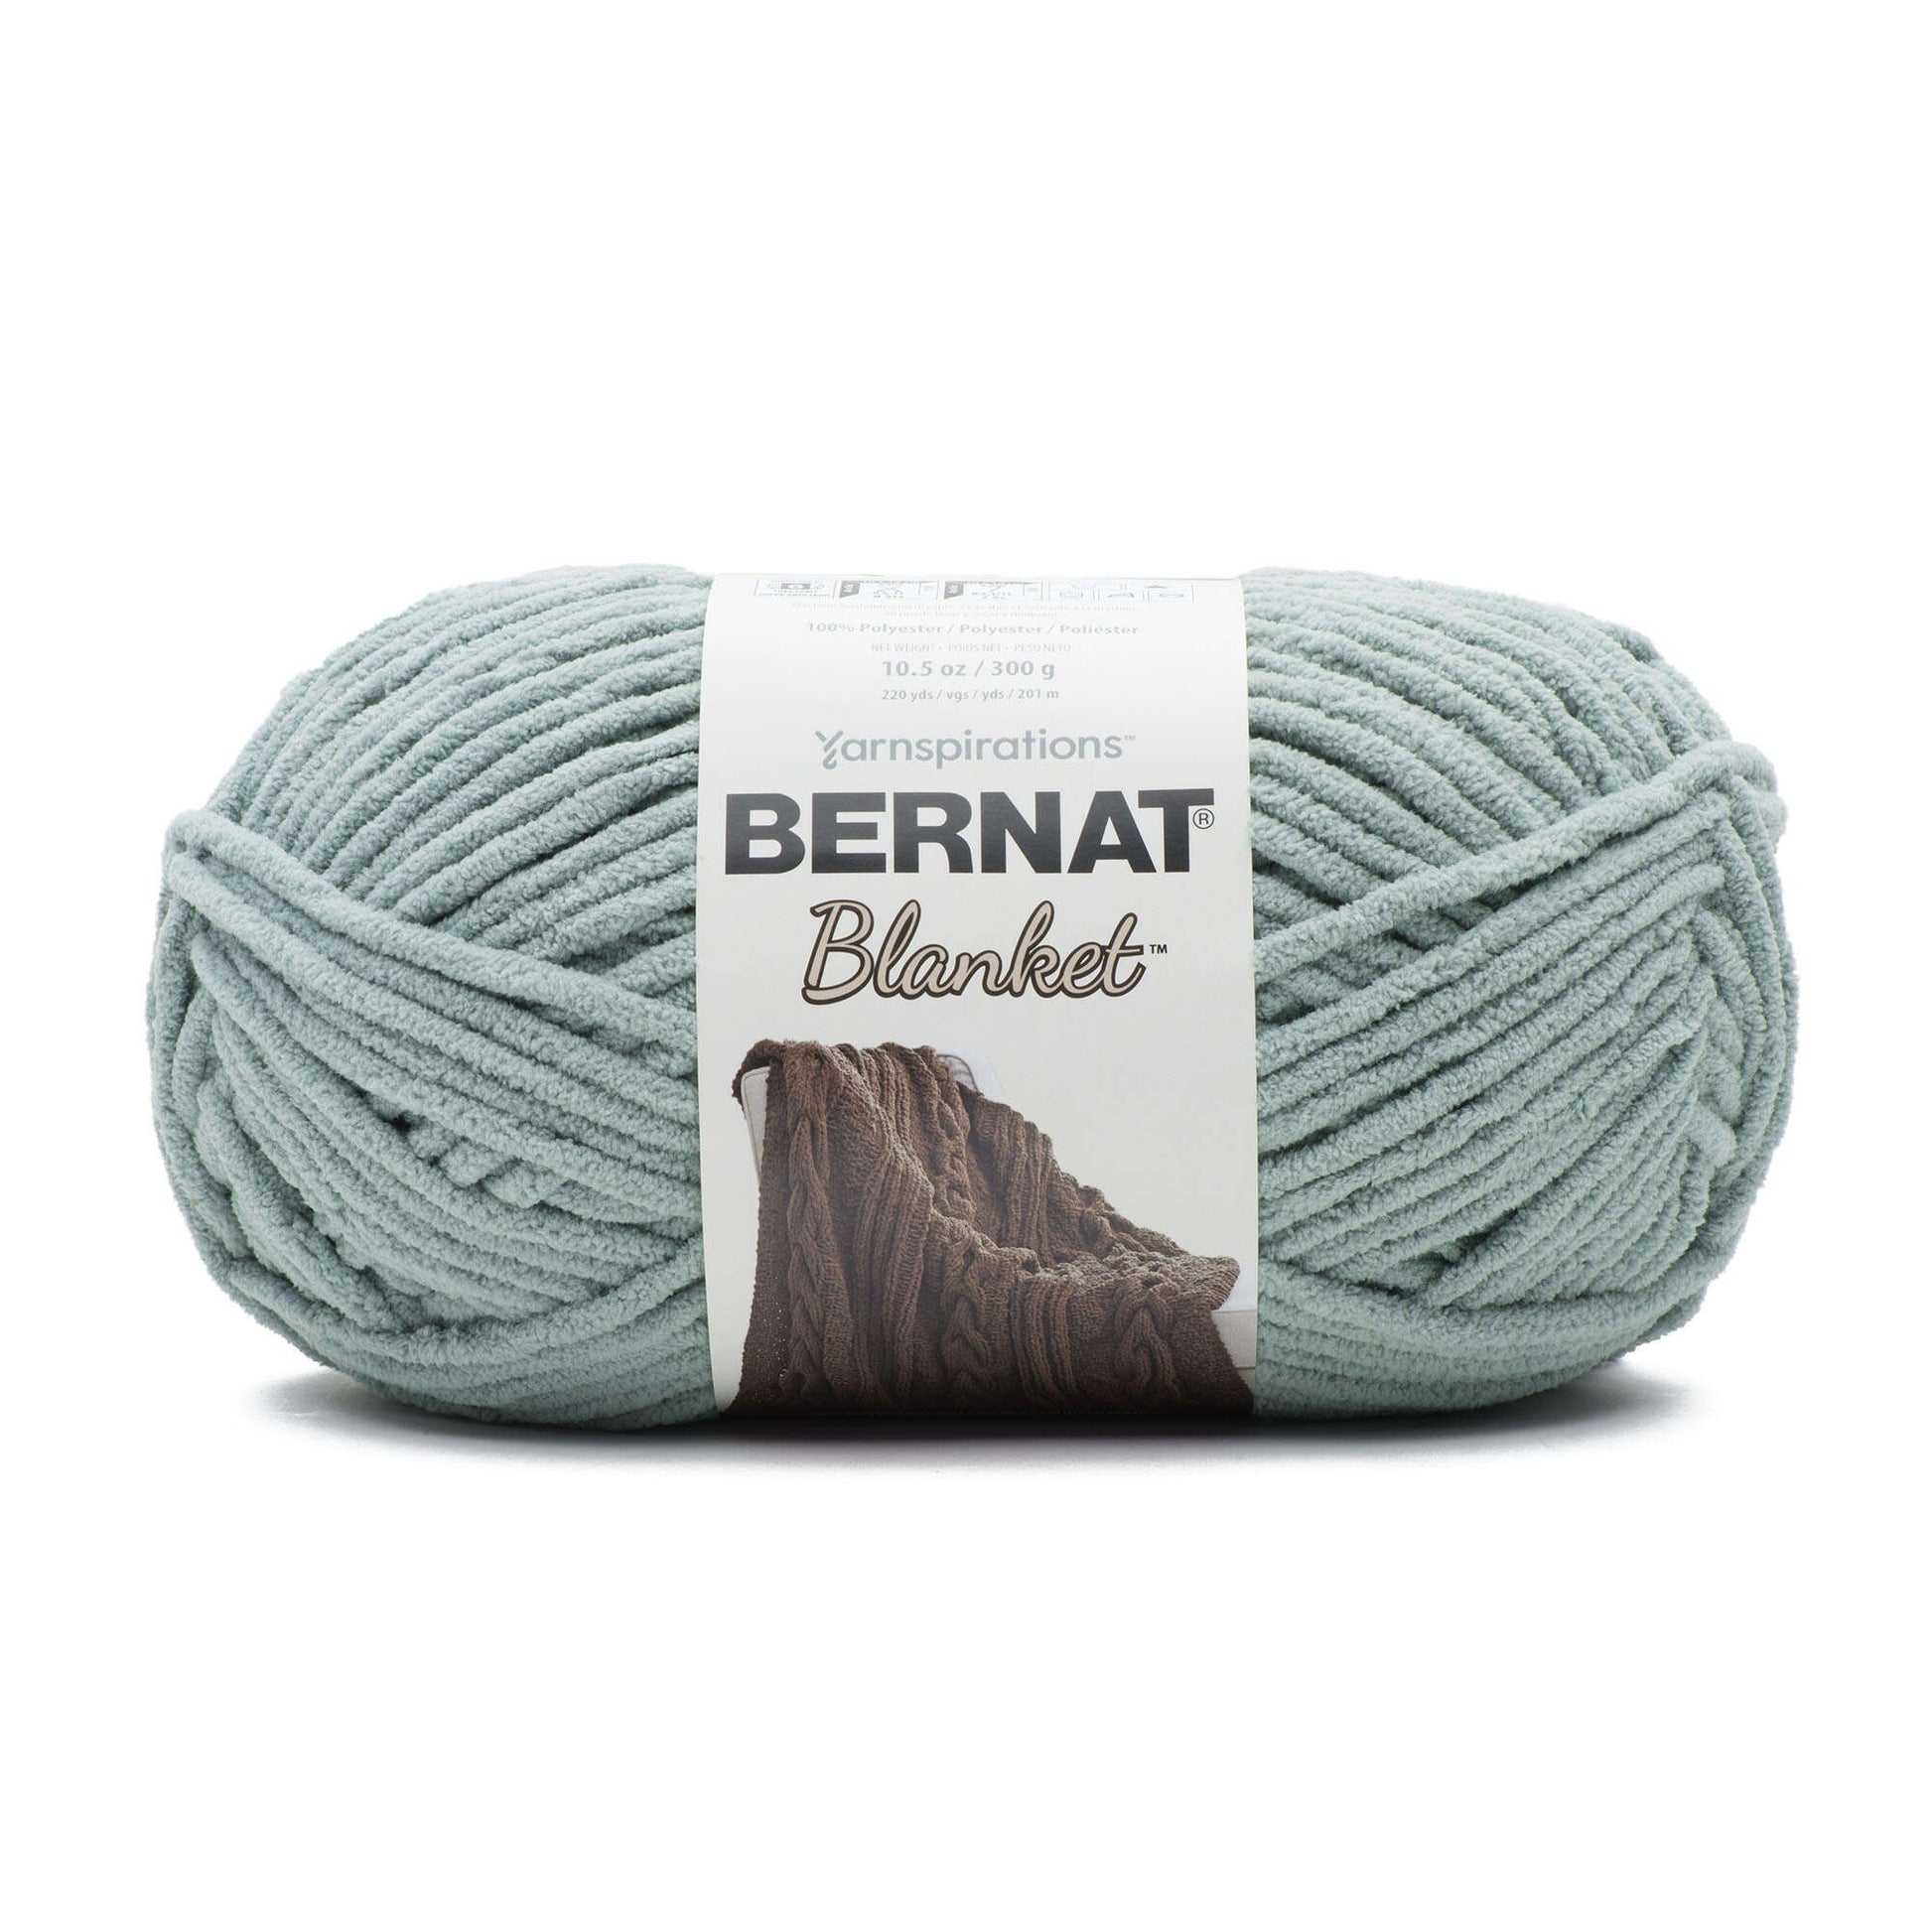 Bernat Blanket Yarn (300g/10.5oz) Misty Green